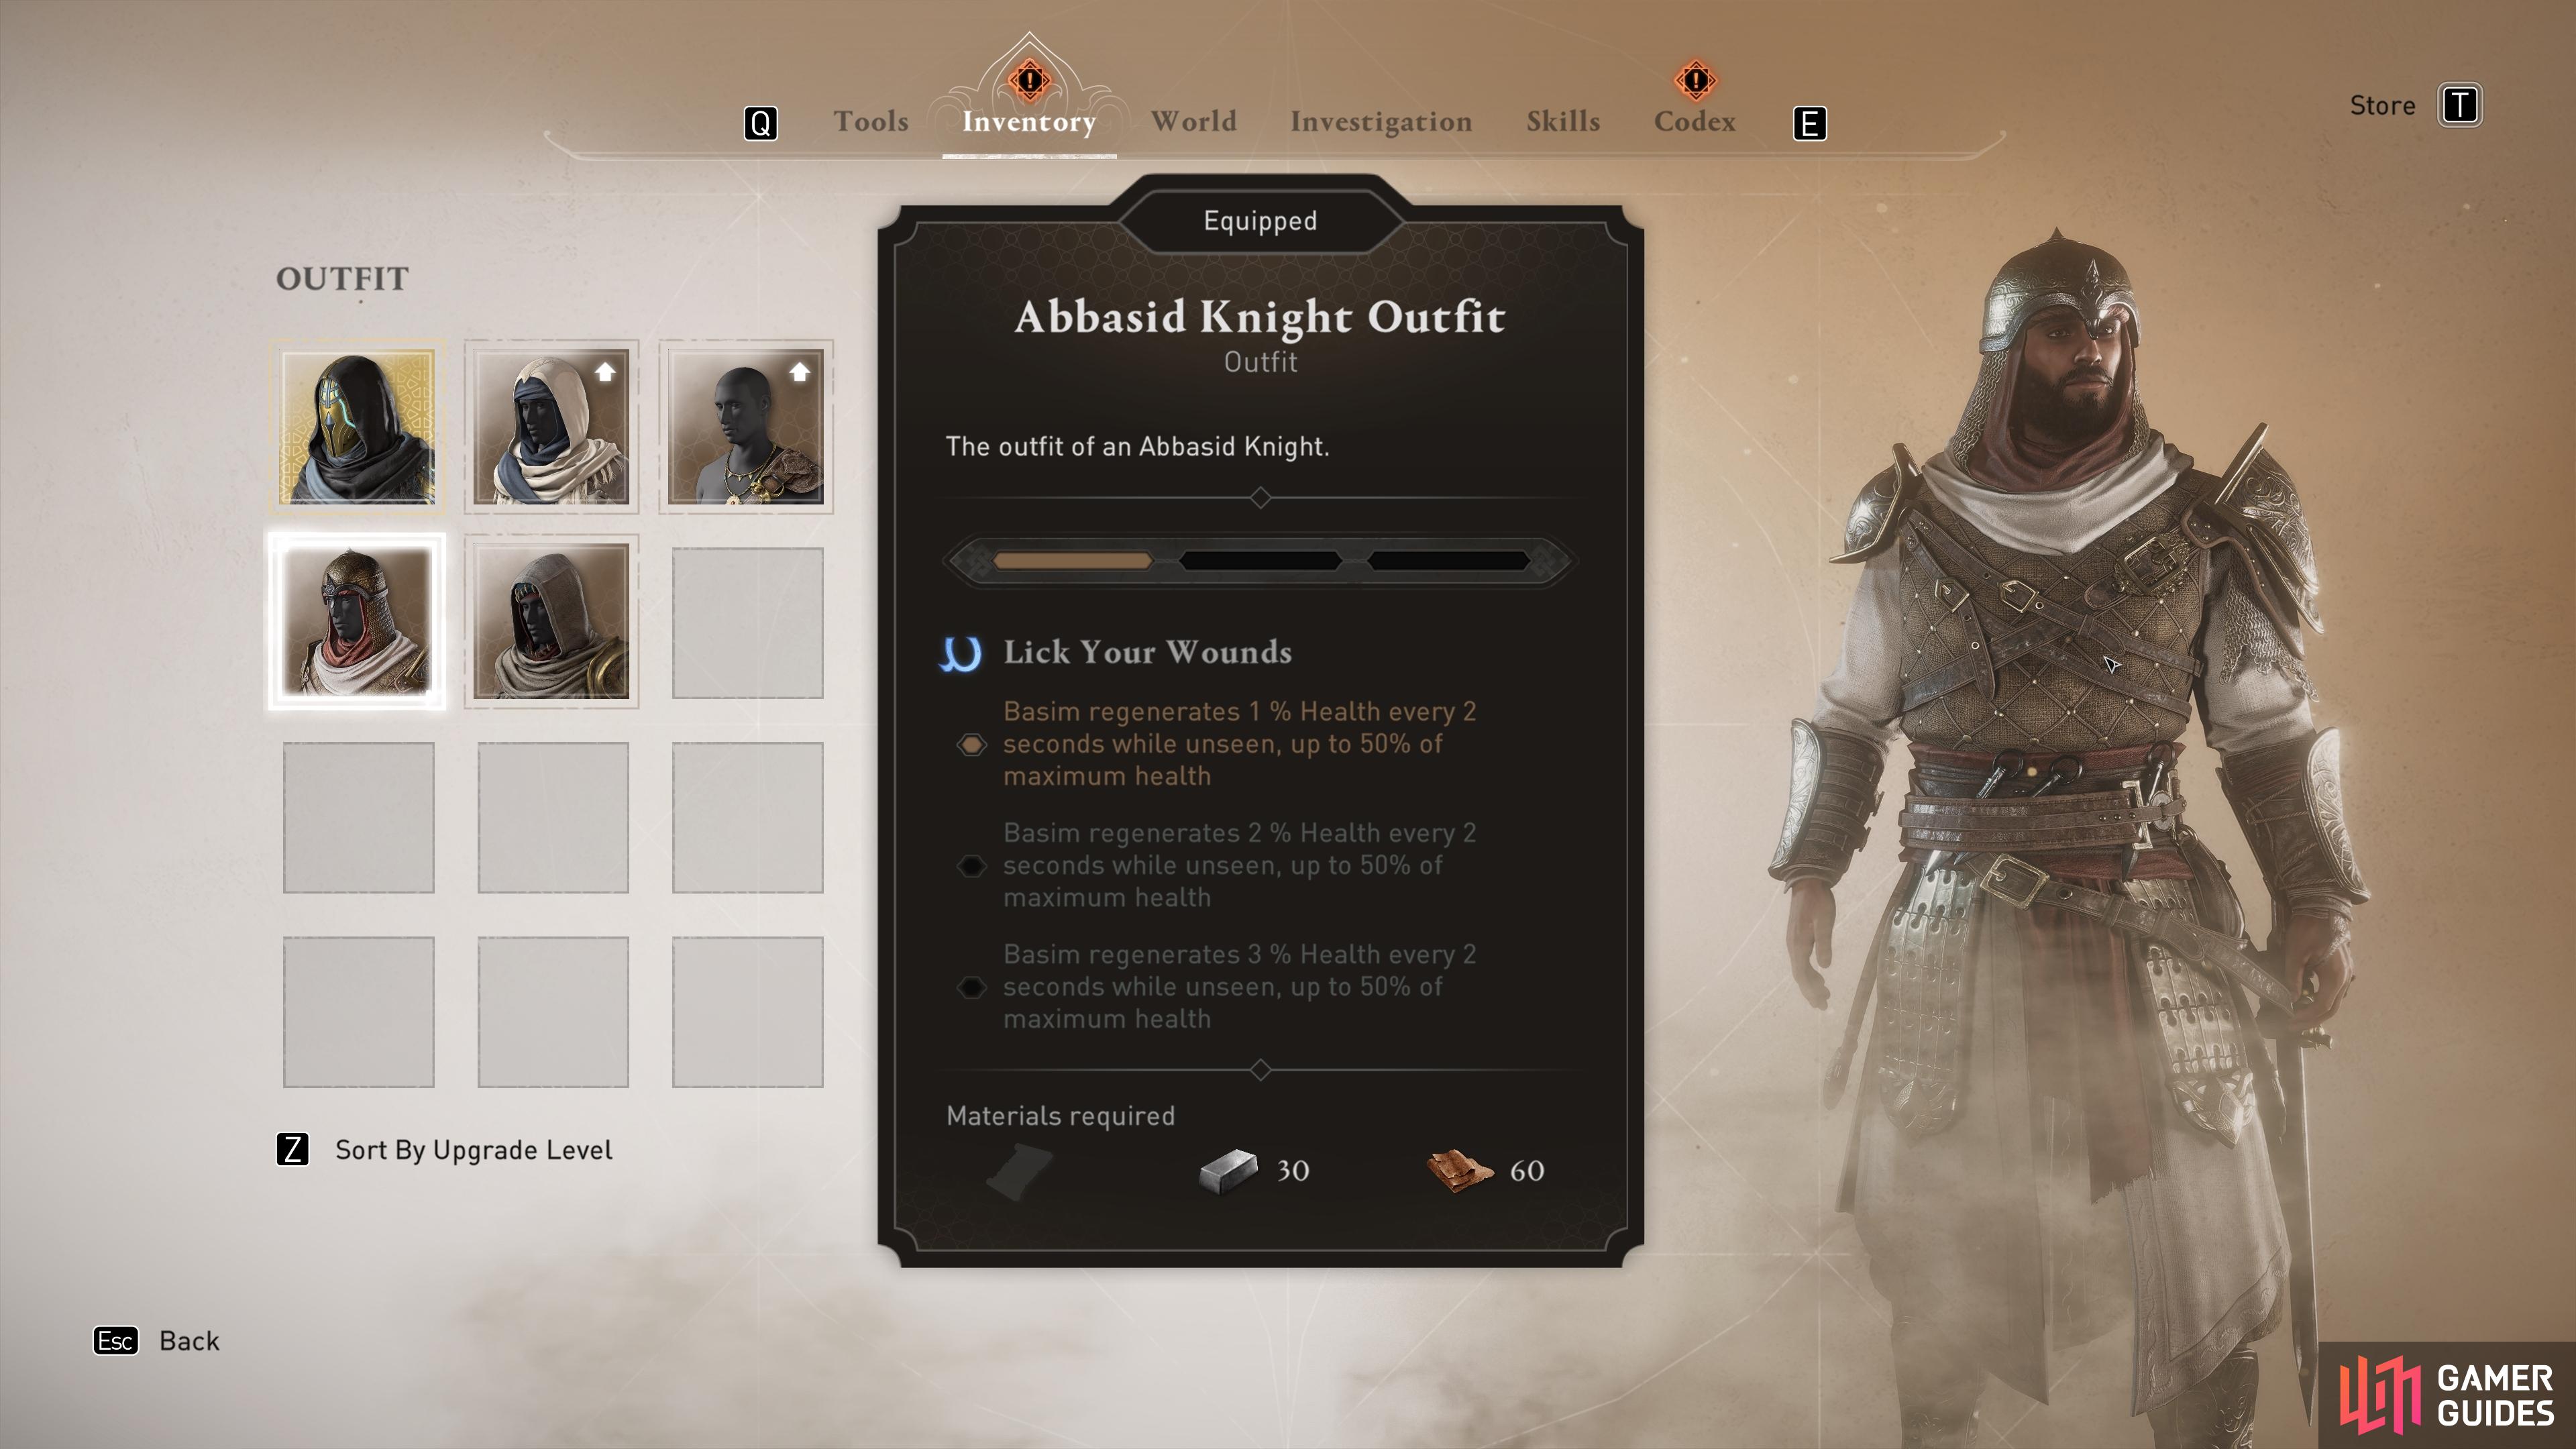 Assassin's Creed Mirage - Basim Kills The Treasurer [ HARD